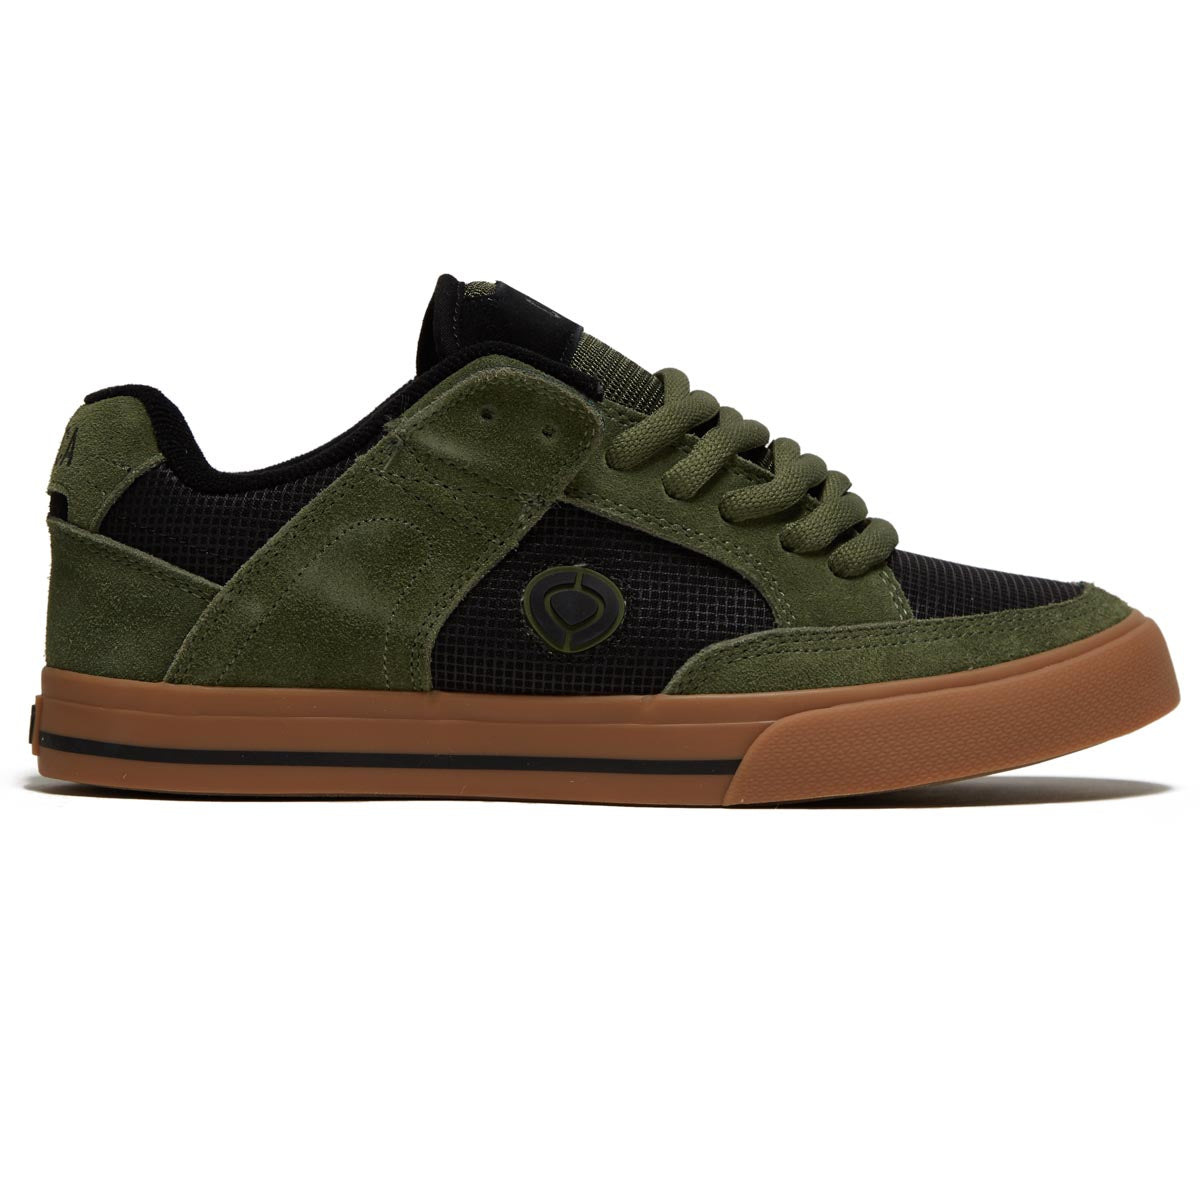 C1rca 205 Vulc Se Shoes - Black/Military Green image 1